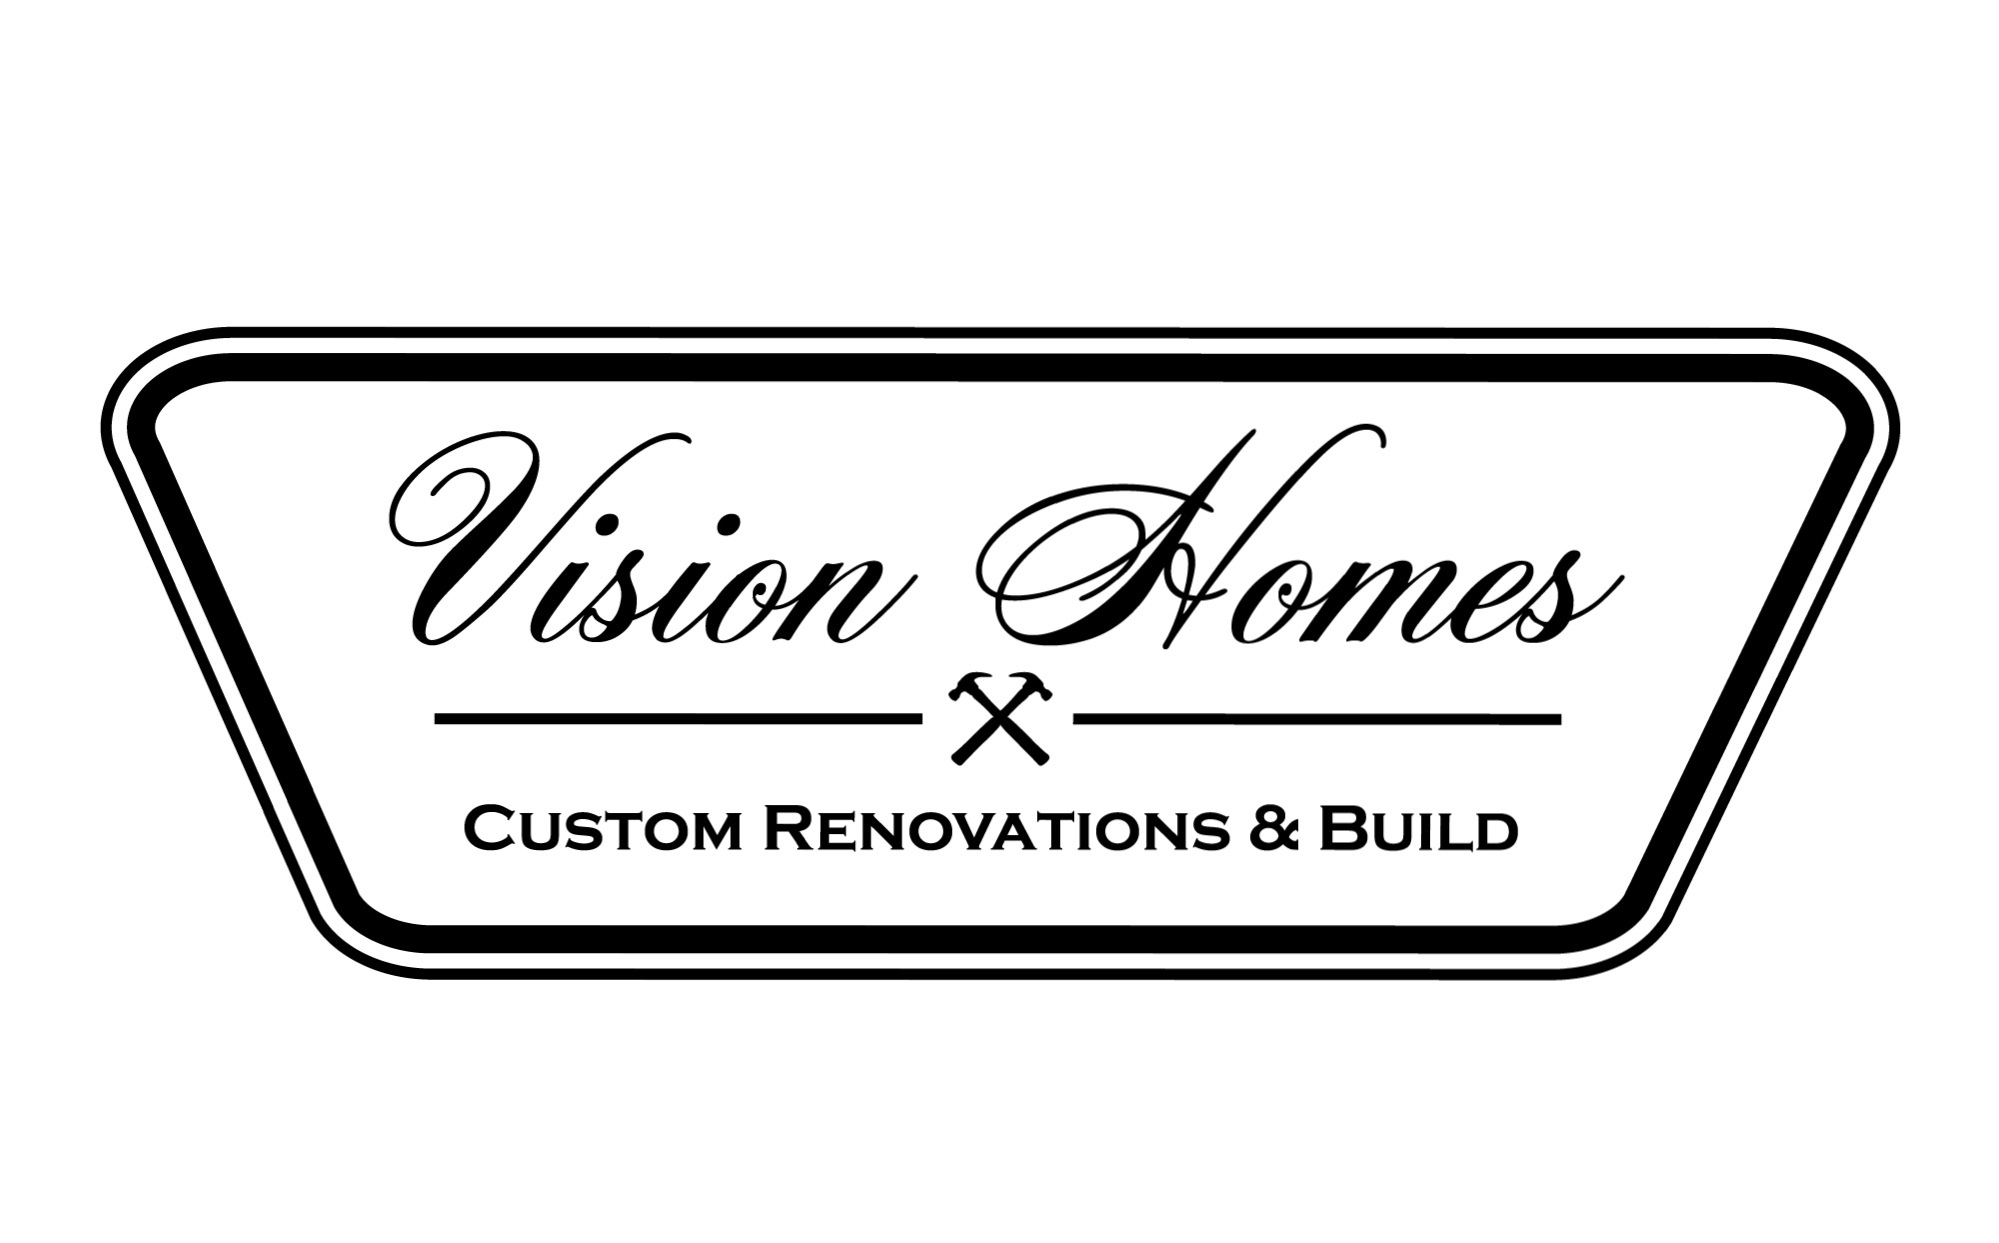 Vision Homes 's logo